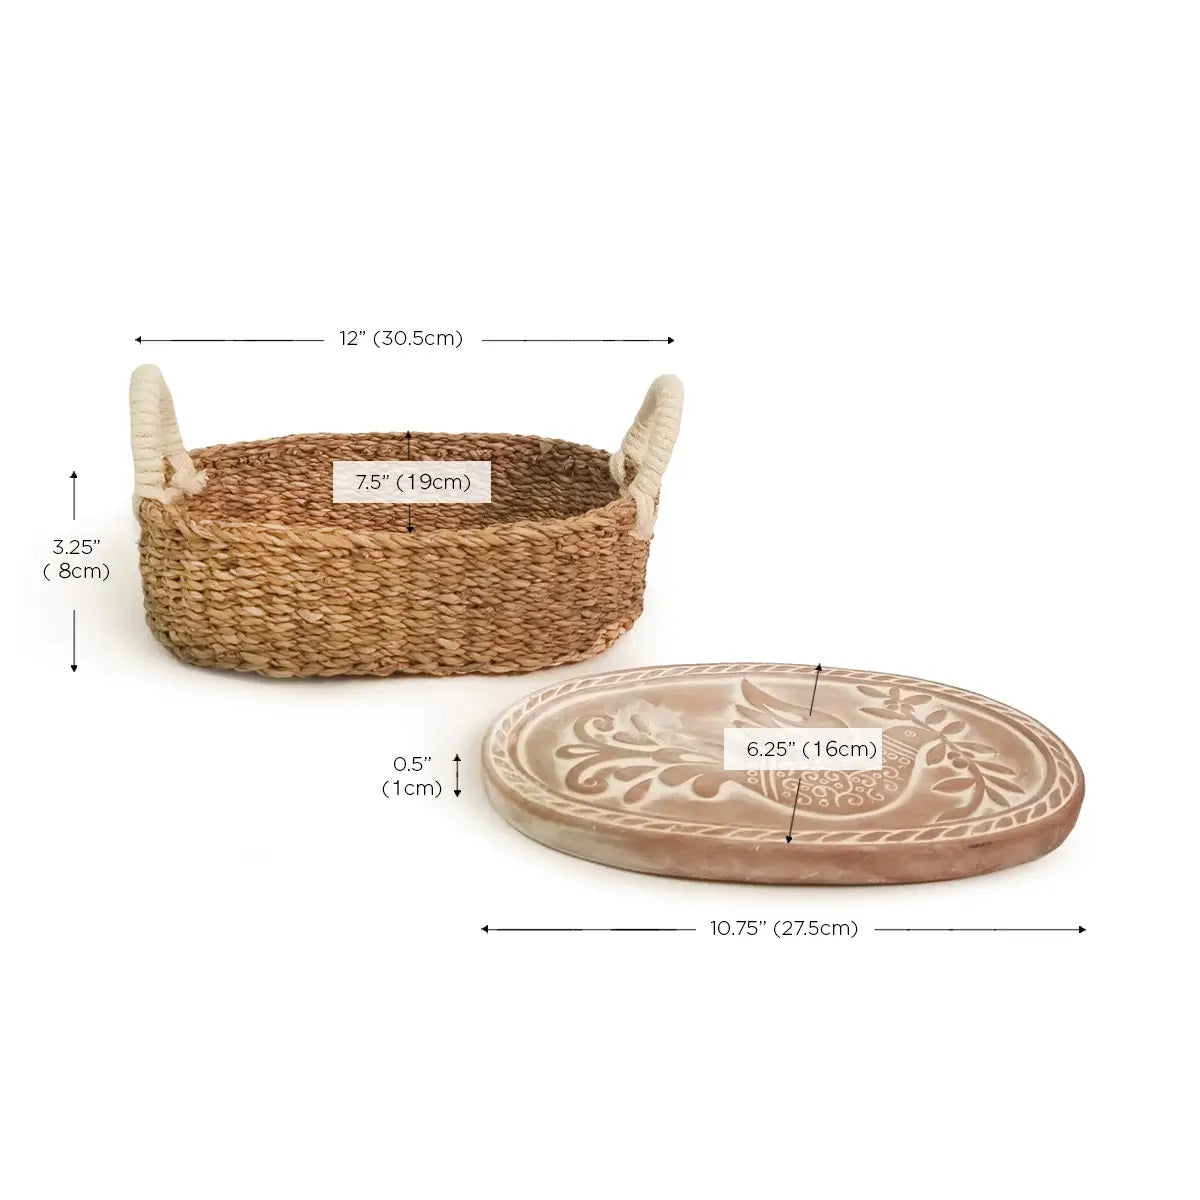 Bread Warmer Basket with Stone - Warming Terracotta Ceramic